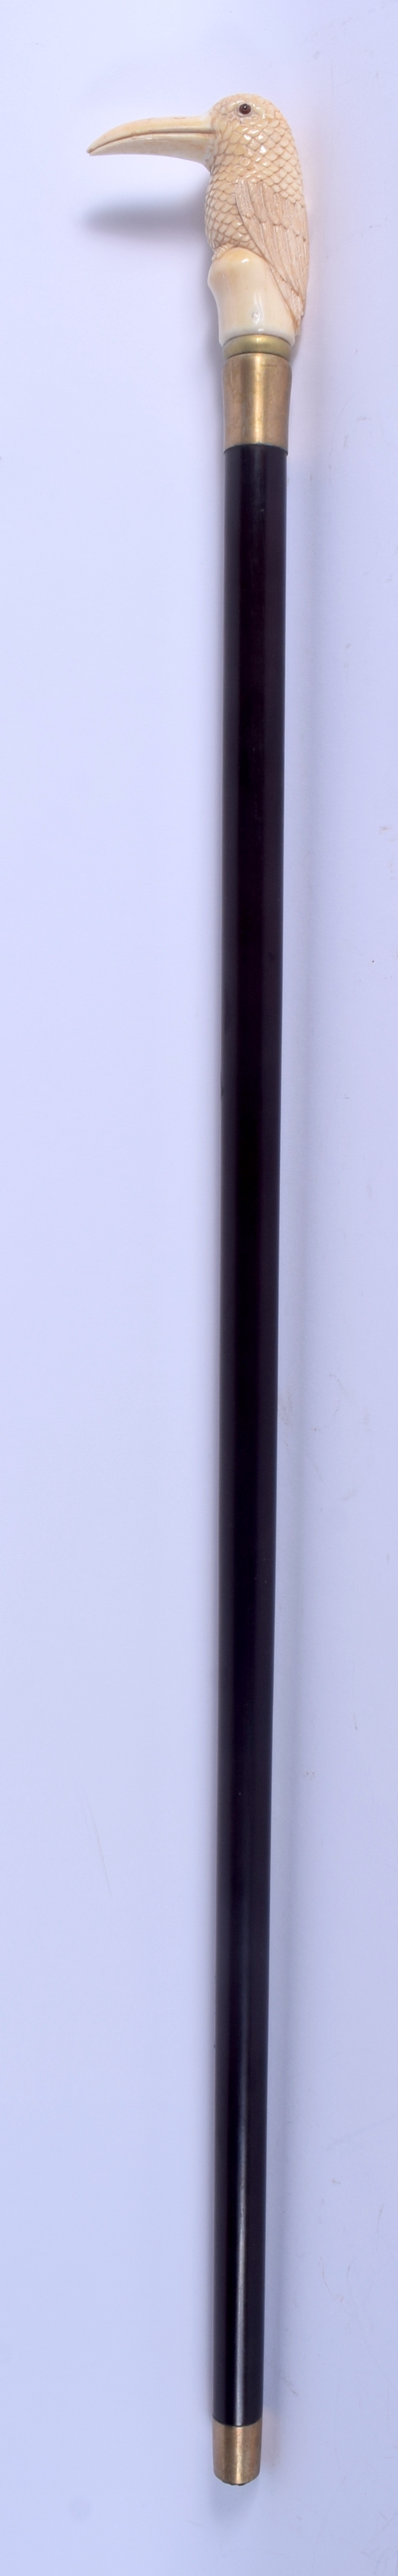 A NOVELTY BONE HANDLED CARVED WOOD WALKING CANE. 84 cm long. - Image 3 of 3